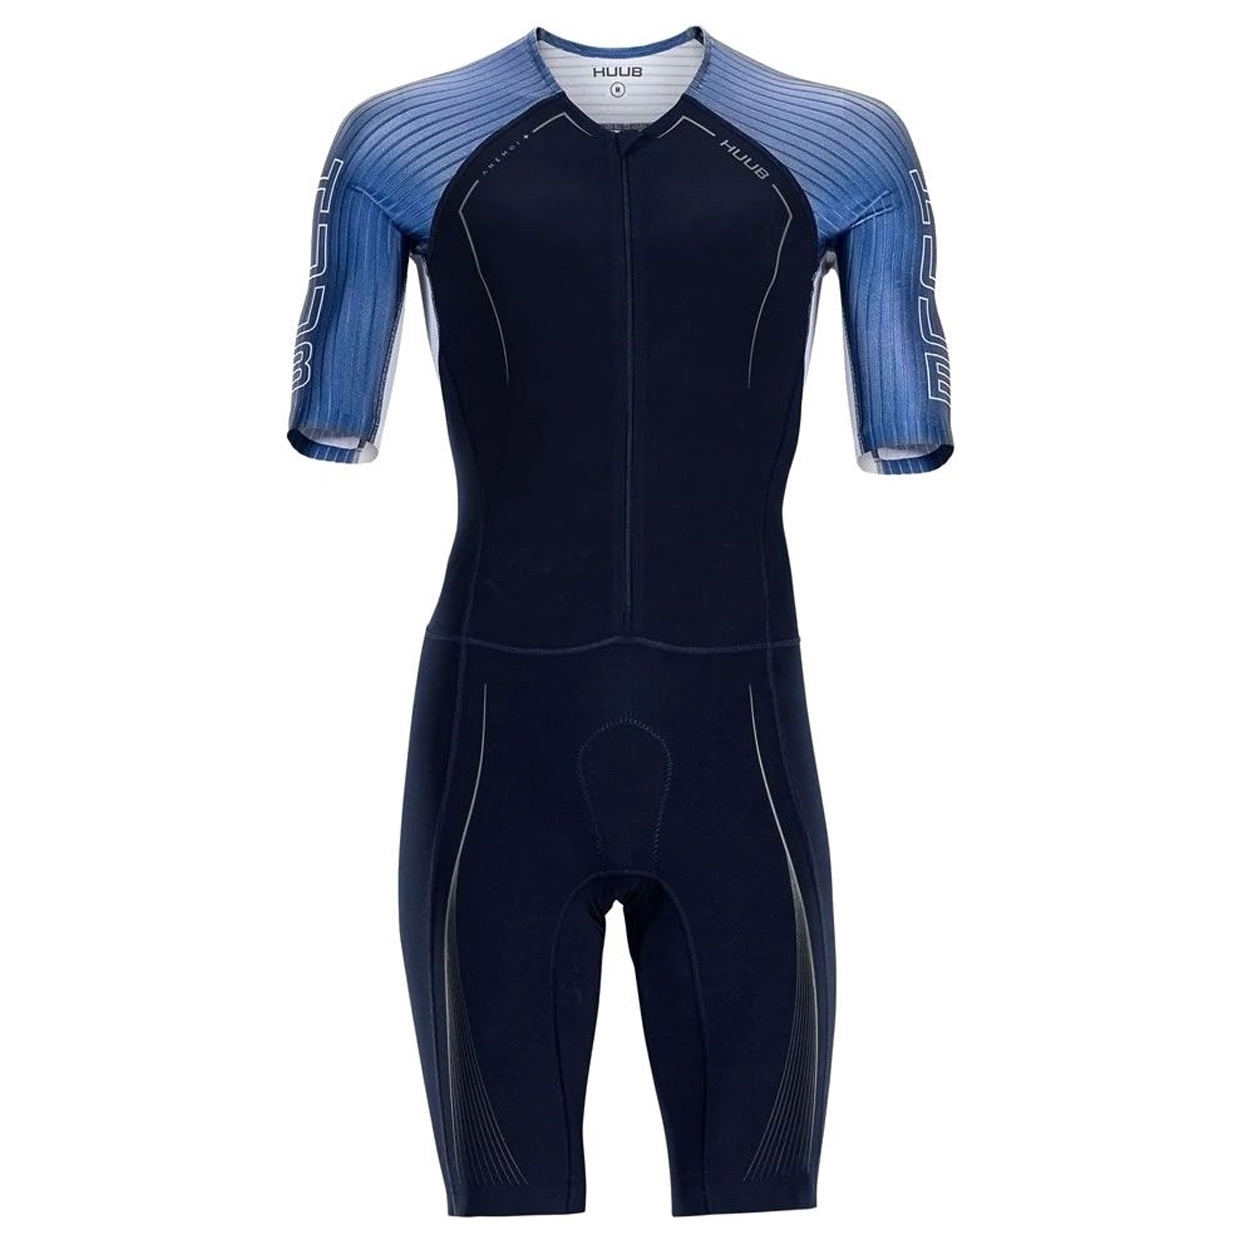 Herren Triathlonanzug Anemoi Aero + Flatlock Tri Suit Einteiler